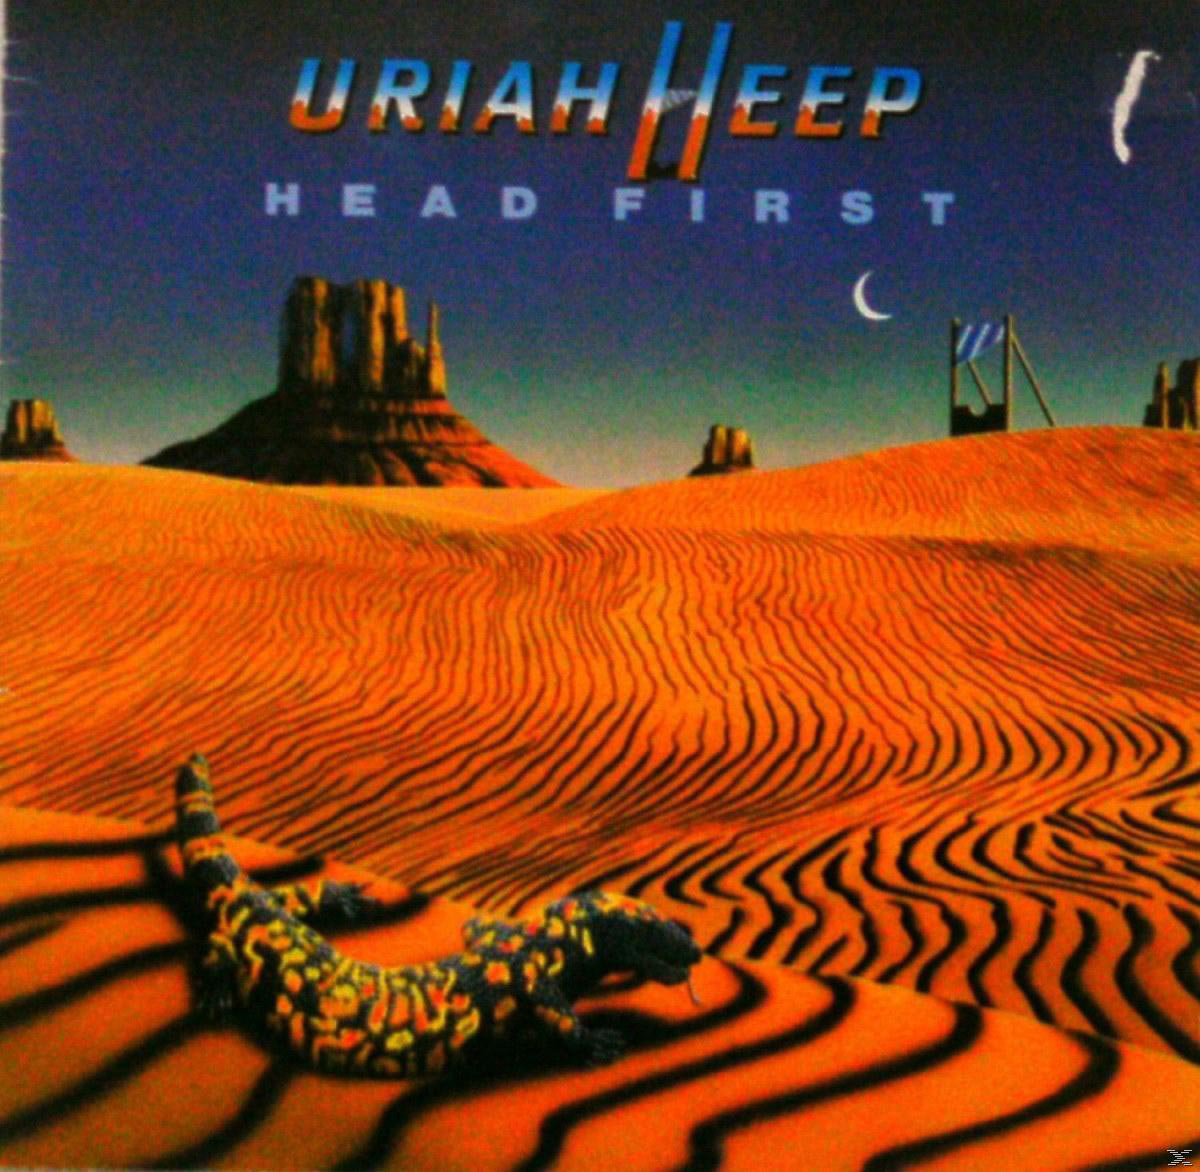 - - Head First Heep Uriah (Vinyl)